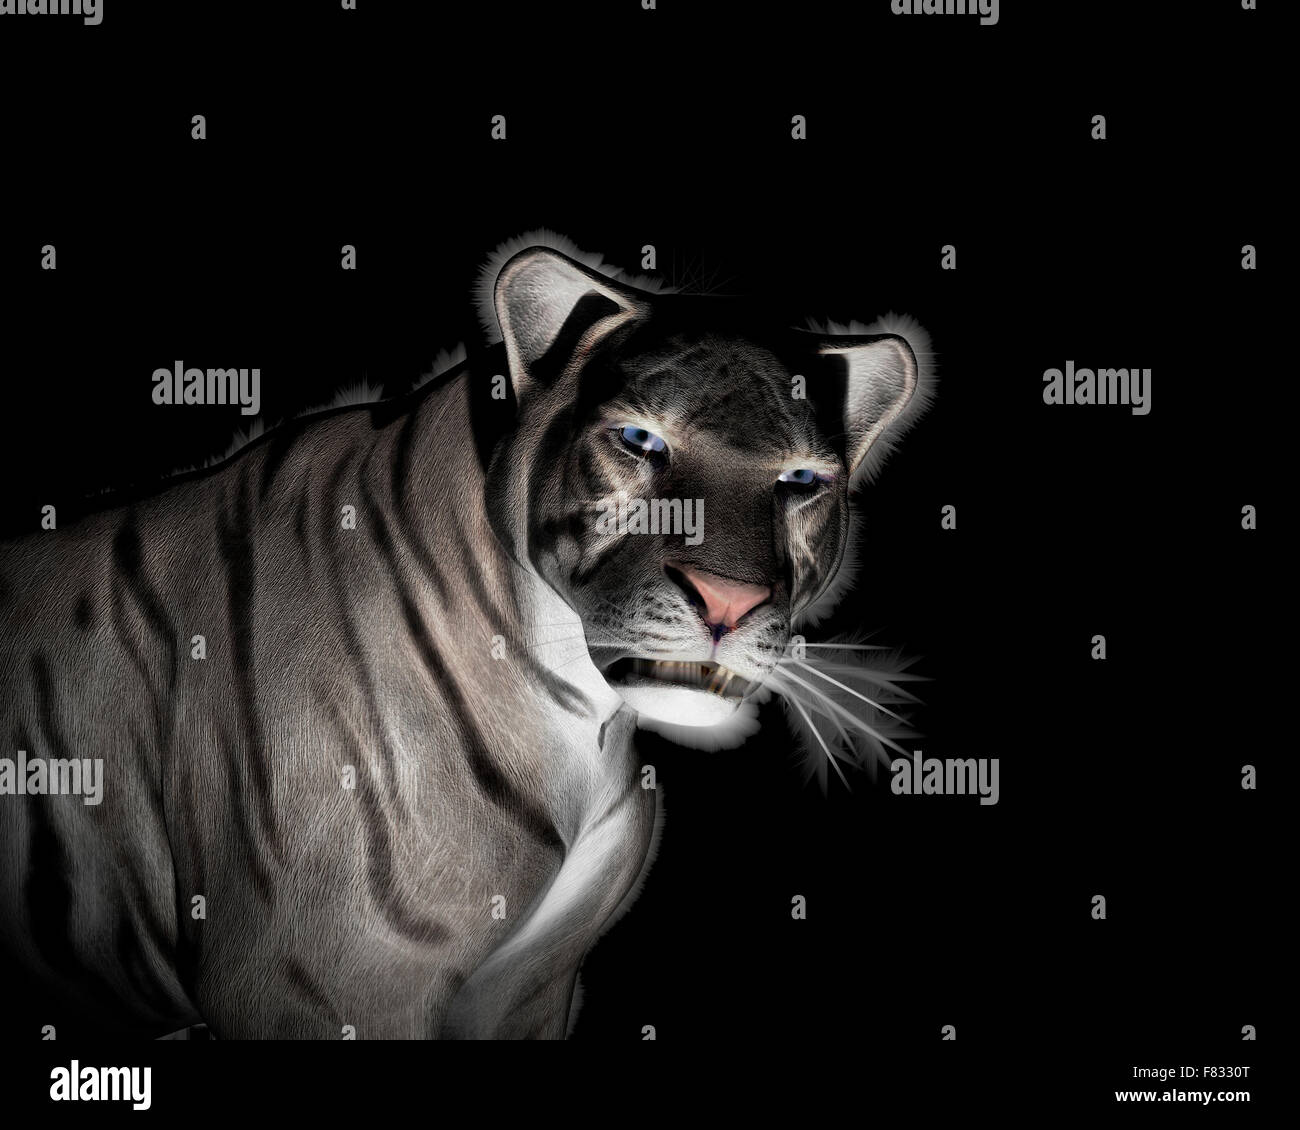 White Tiger Illustration at black background Stock Photo